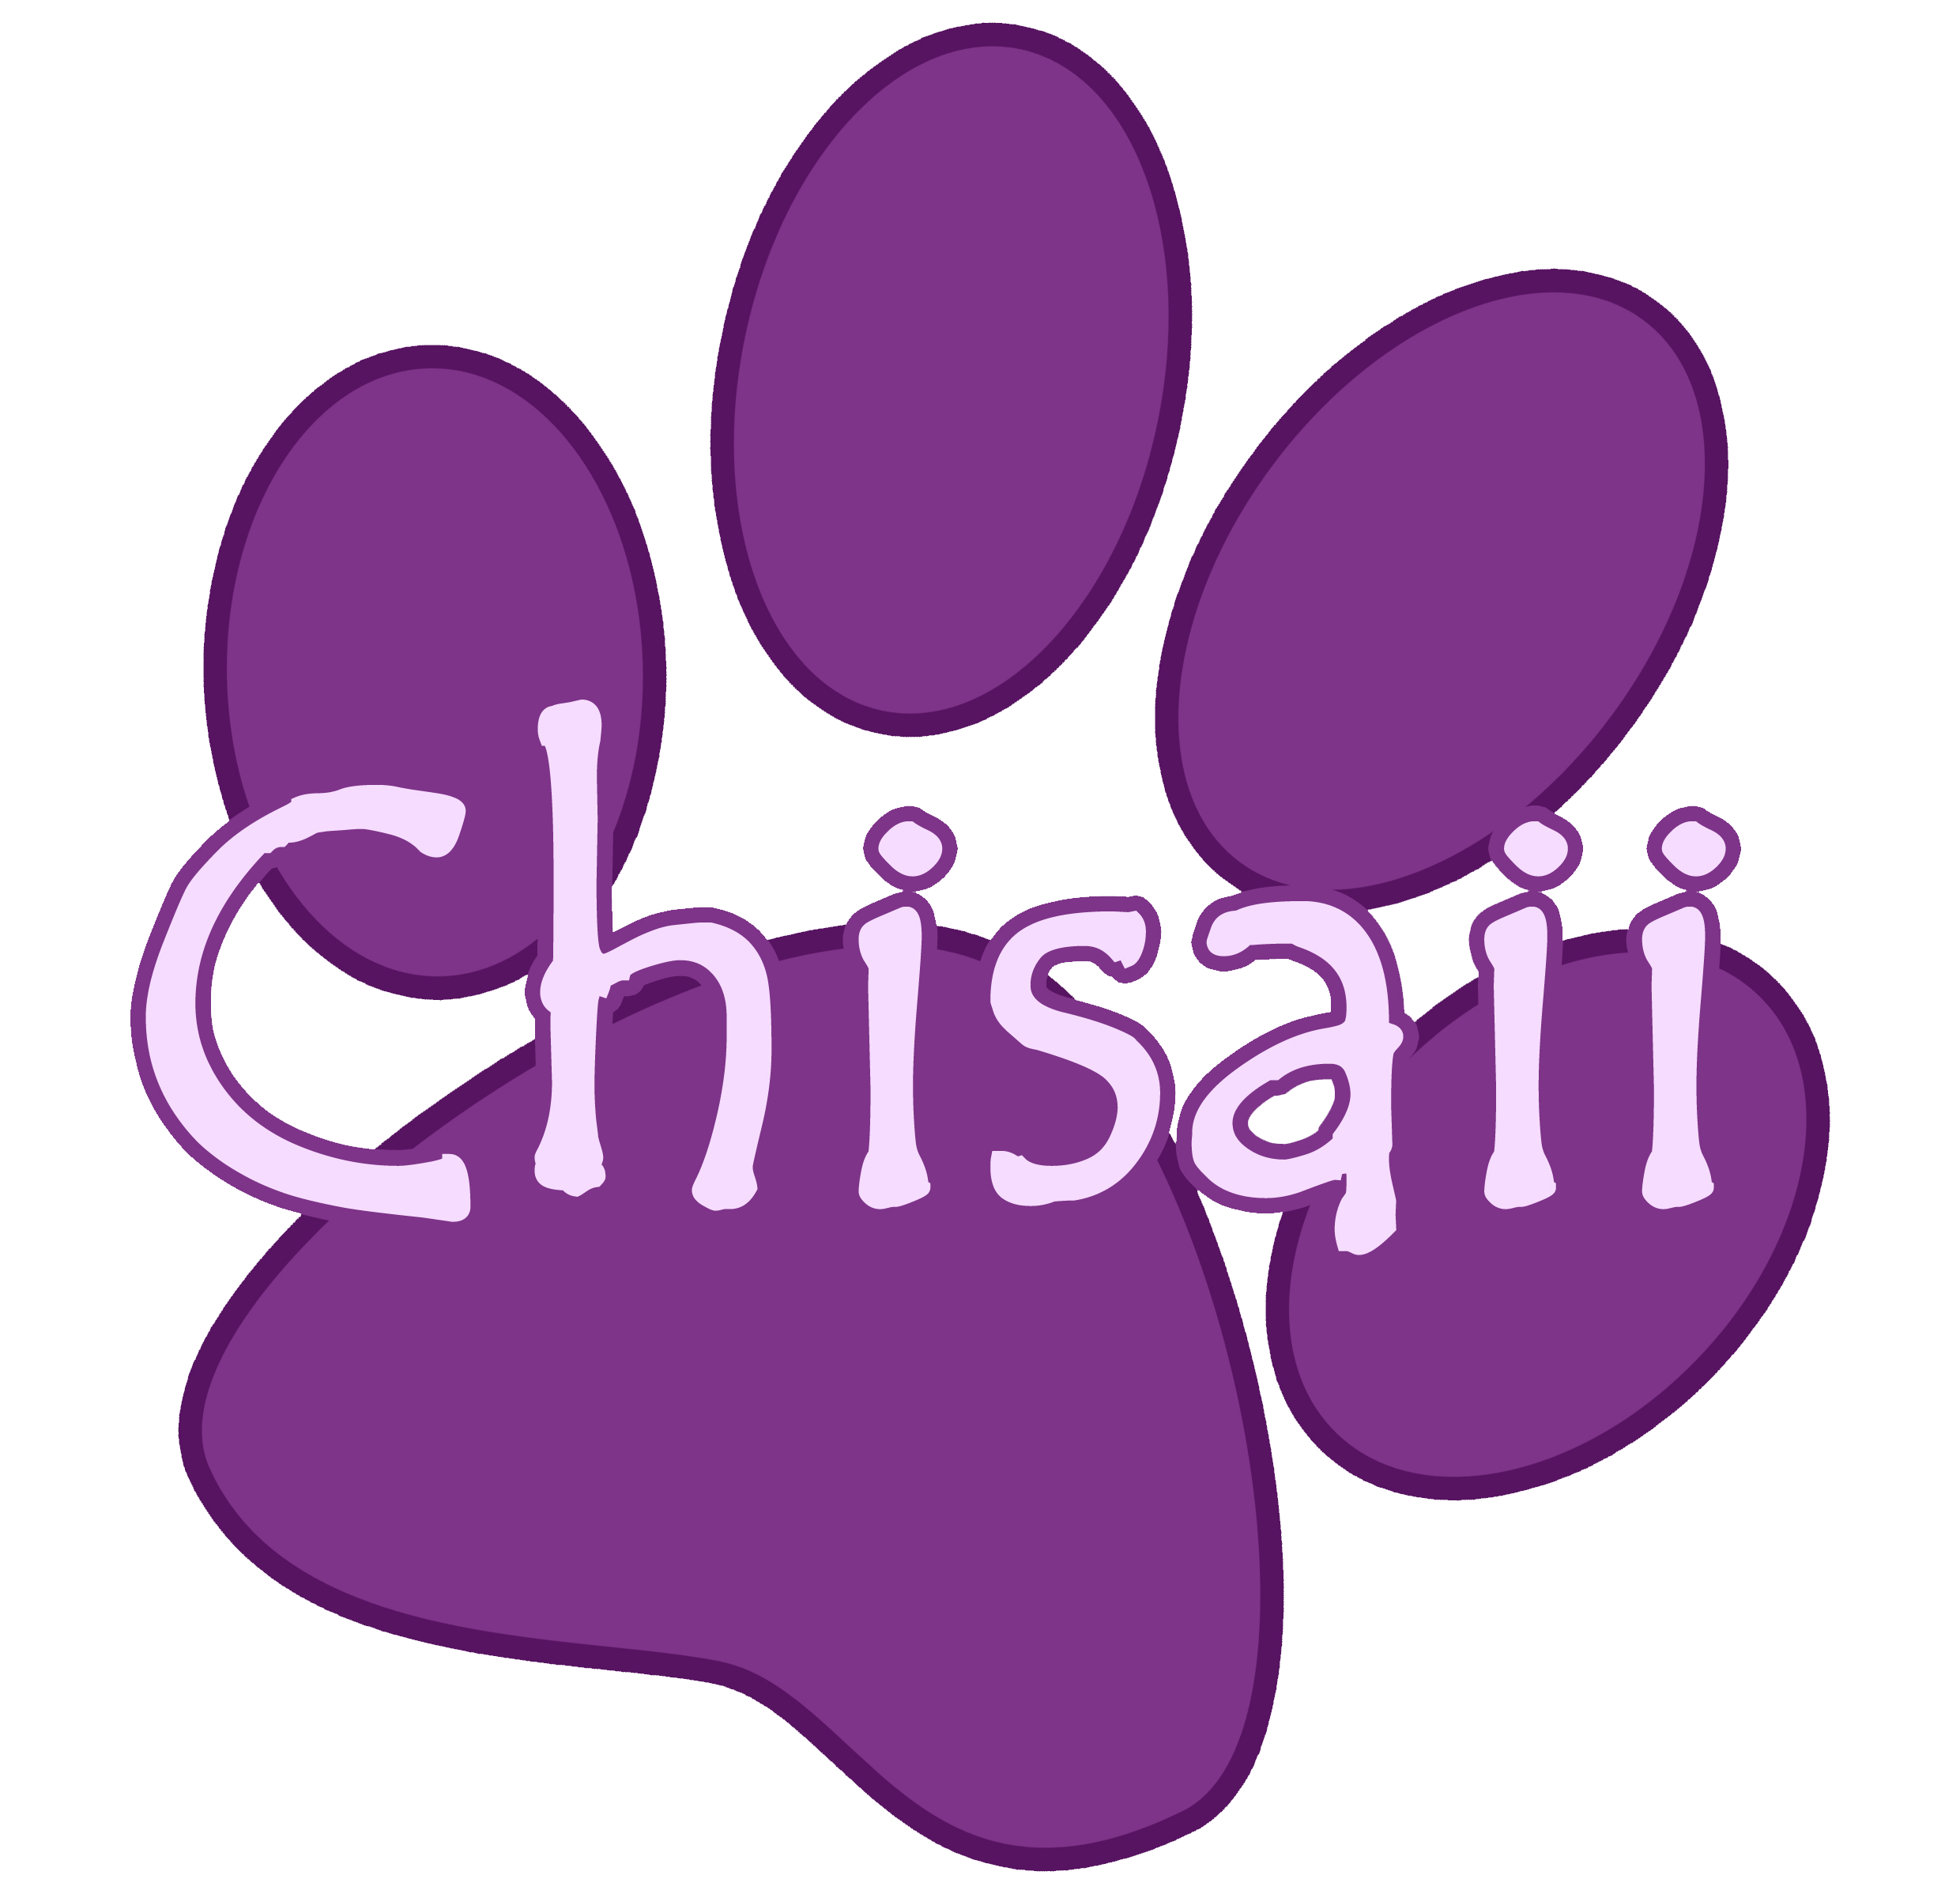 Chisaii